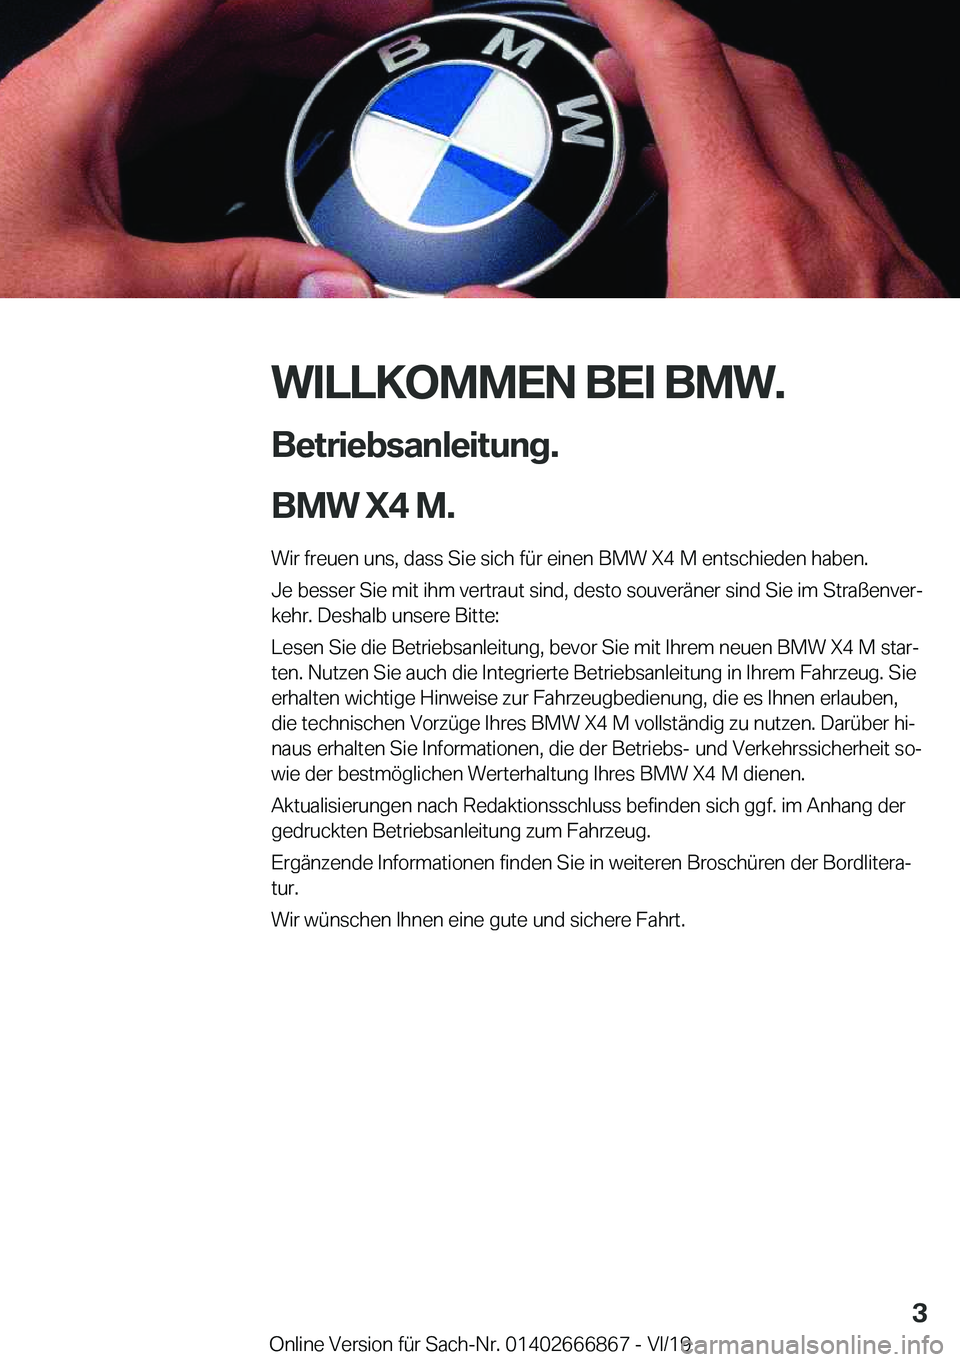 BMW X4 M 2020  Betriebsanleitungen (in German) �W�I�L�L�K�O�M�M�E�N��B�E�I��B�M�W�.�B�e�t�r�i�e�b�s�a�n�l�e�i�t�u�n�g�.
�B�M�W��X�4��M�. �W�i�r��f�r�e�u�e�n��u�n�s�,��d�a�s�s��S�i�e��s�i�c�h��f�